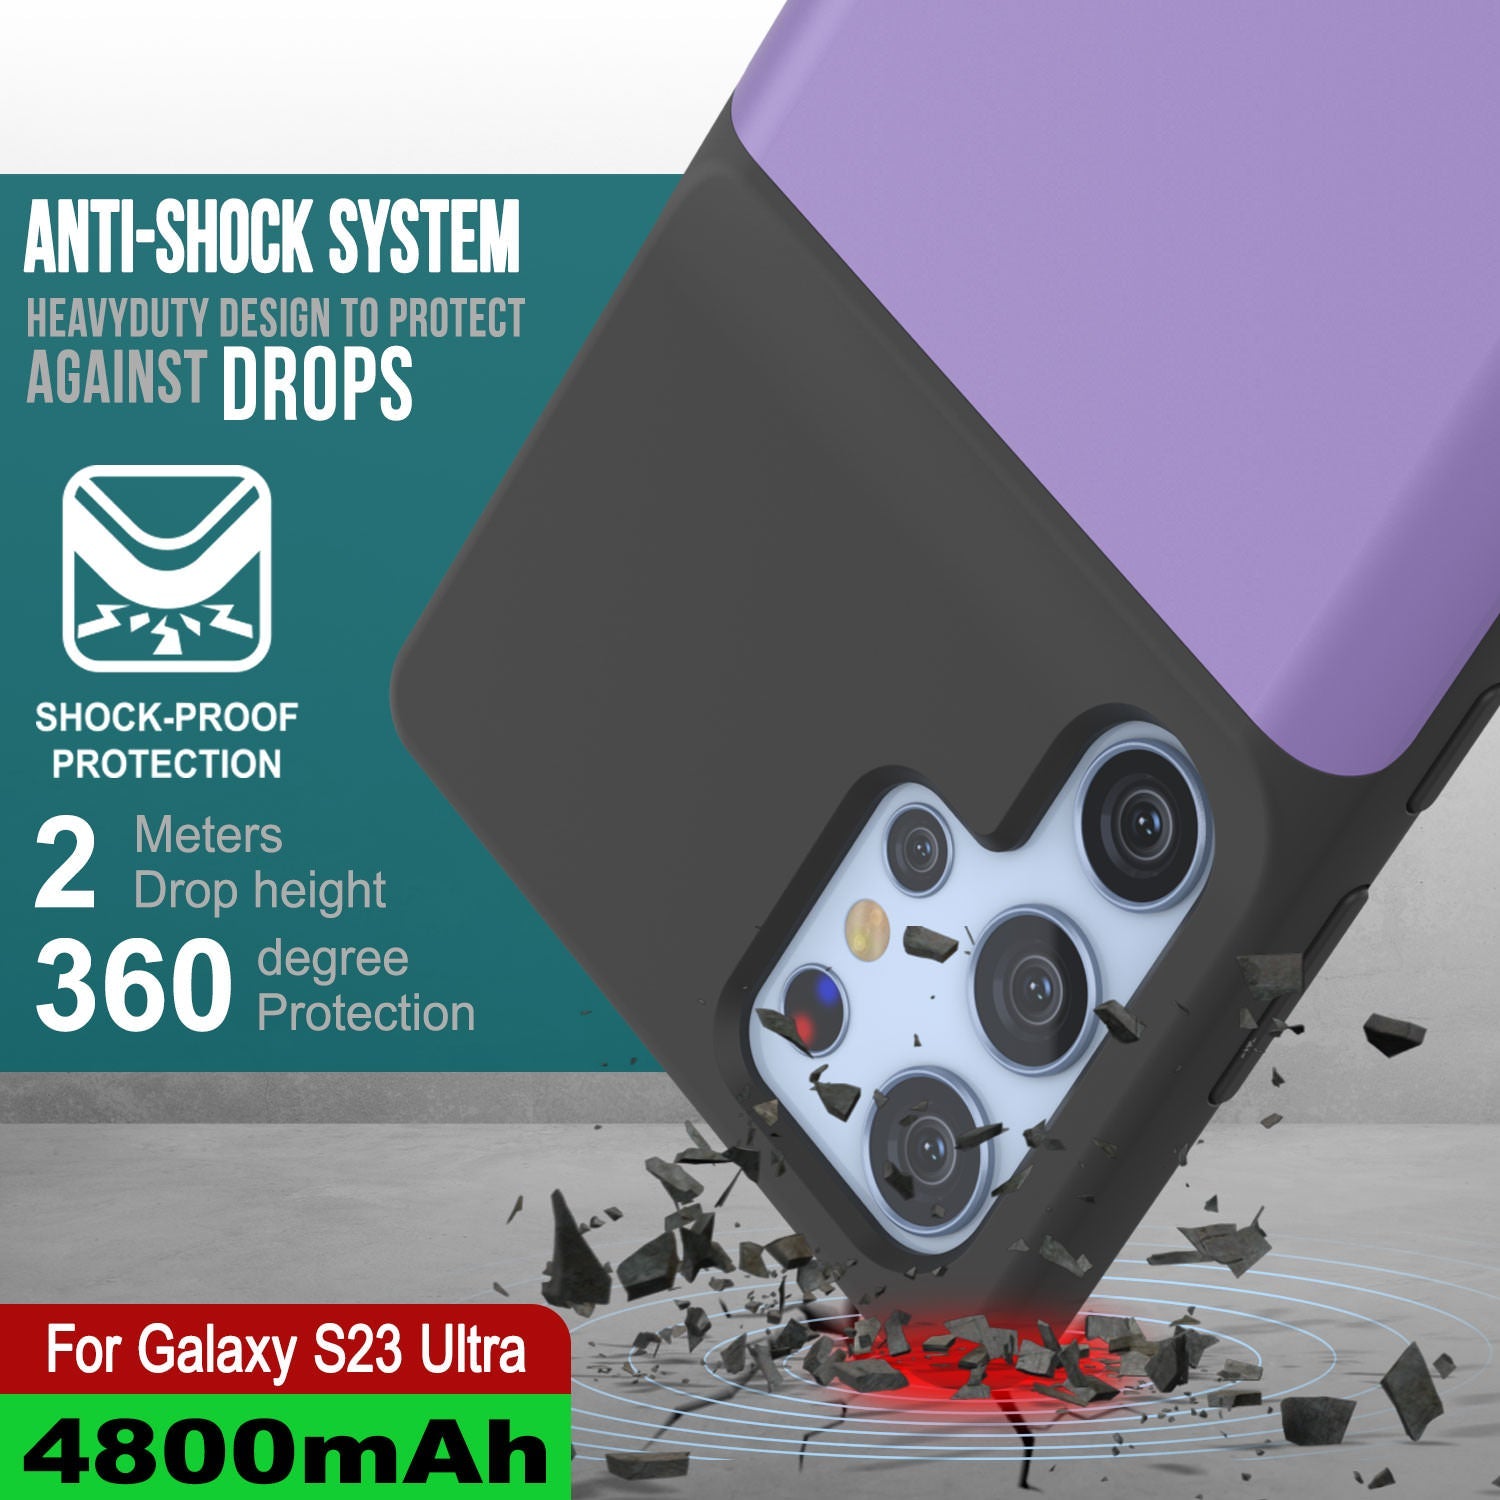 PunkJuice S24+ Plus Battery Case Purple - Portable Charging Power Juice Bank with 5000mAh